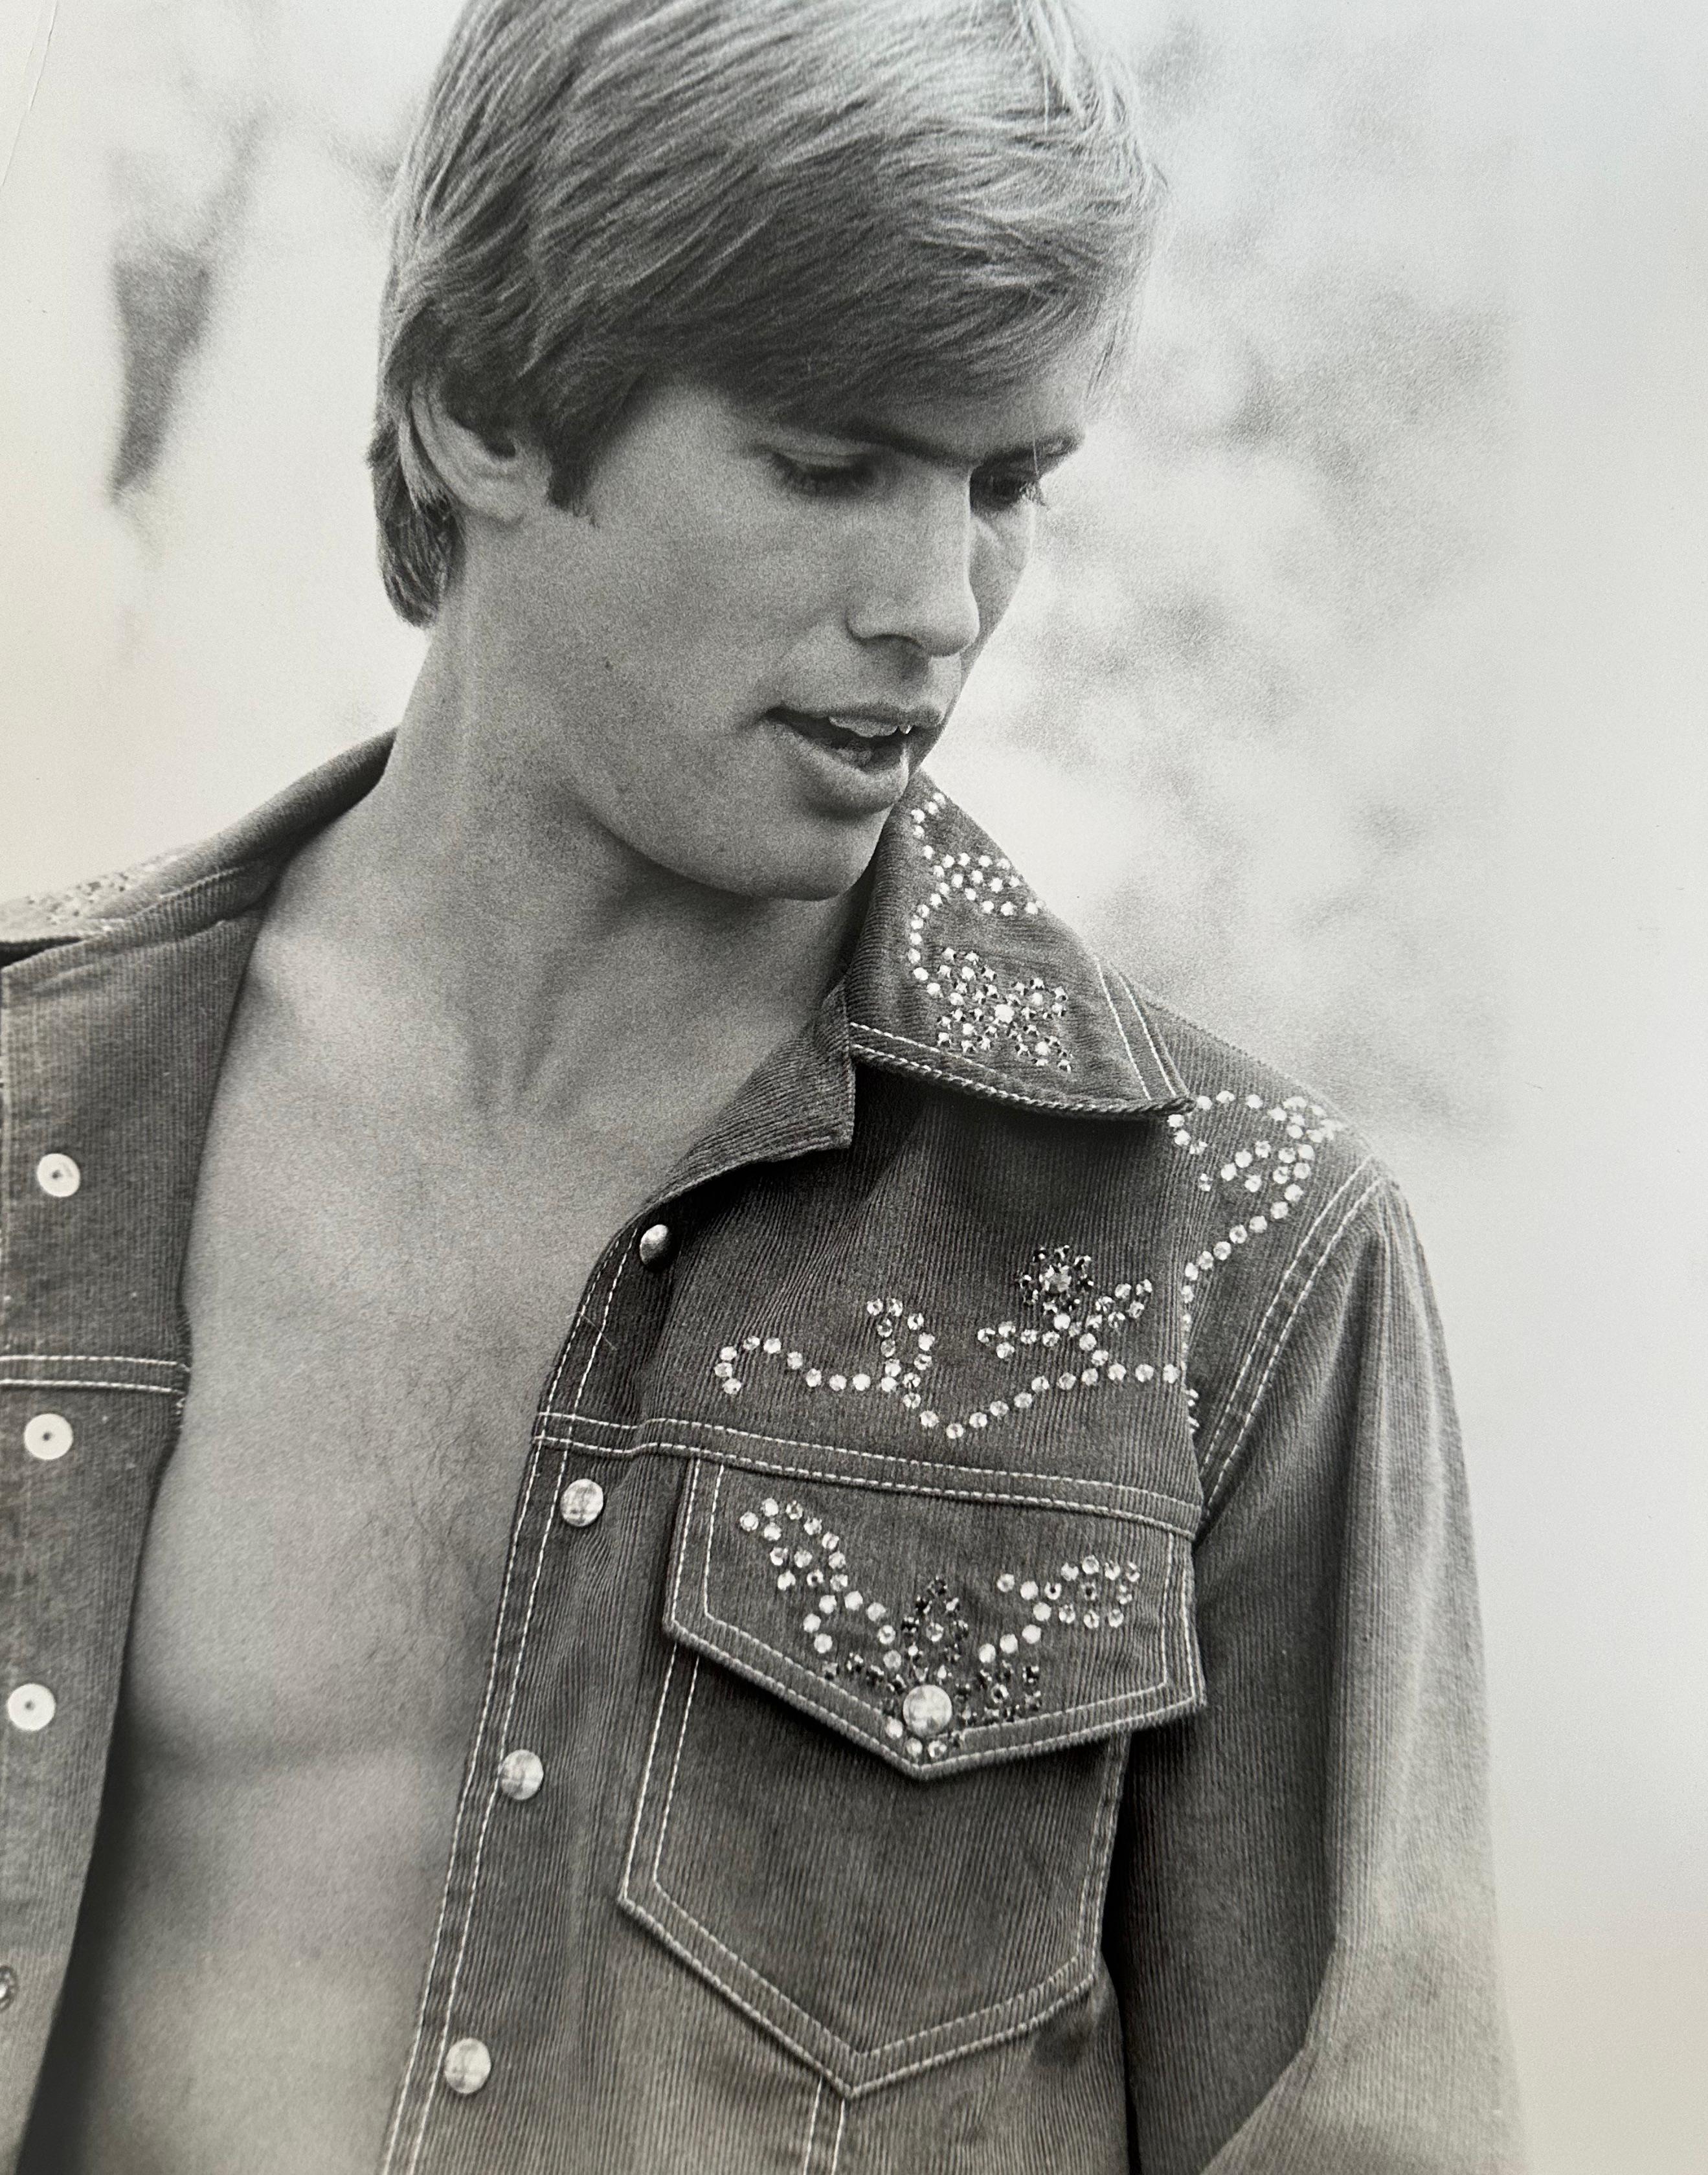 Figurative Photograph Kenn Duncan - 1970 Fashion editorial photo Male Model